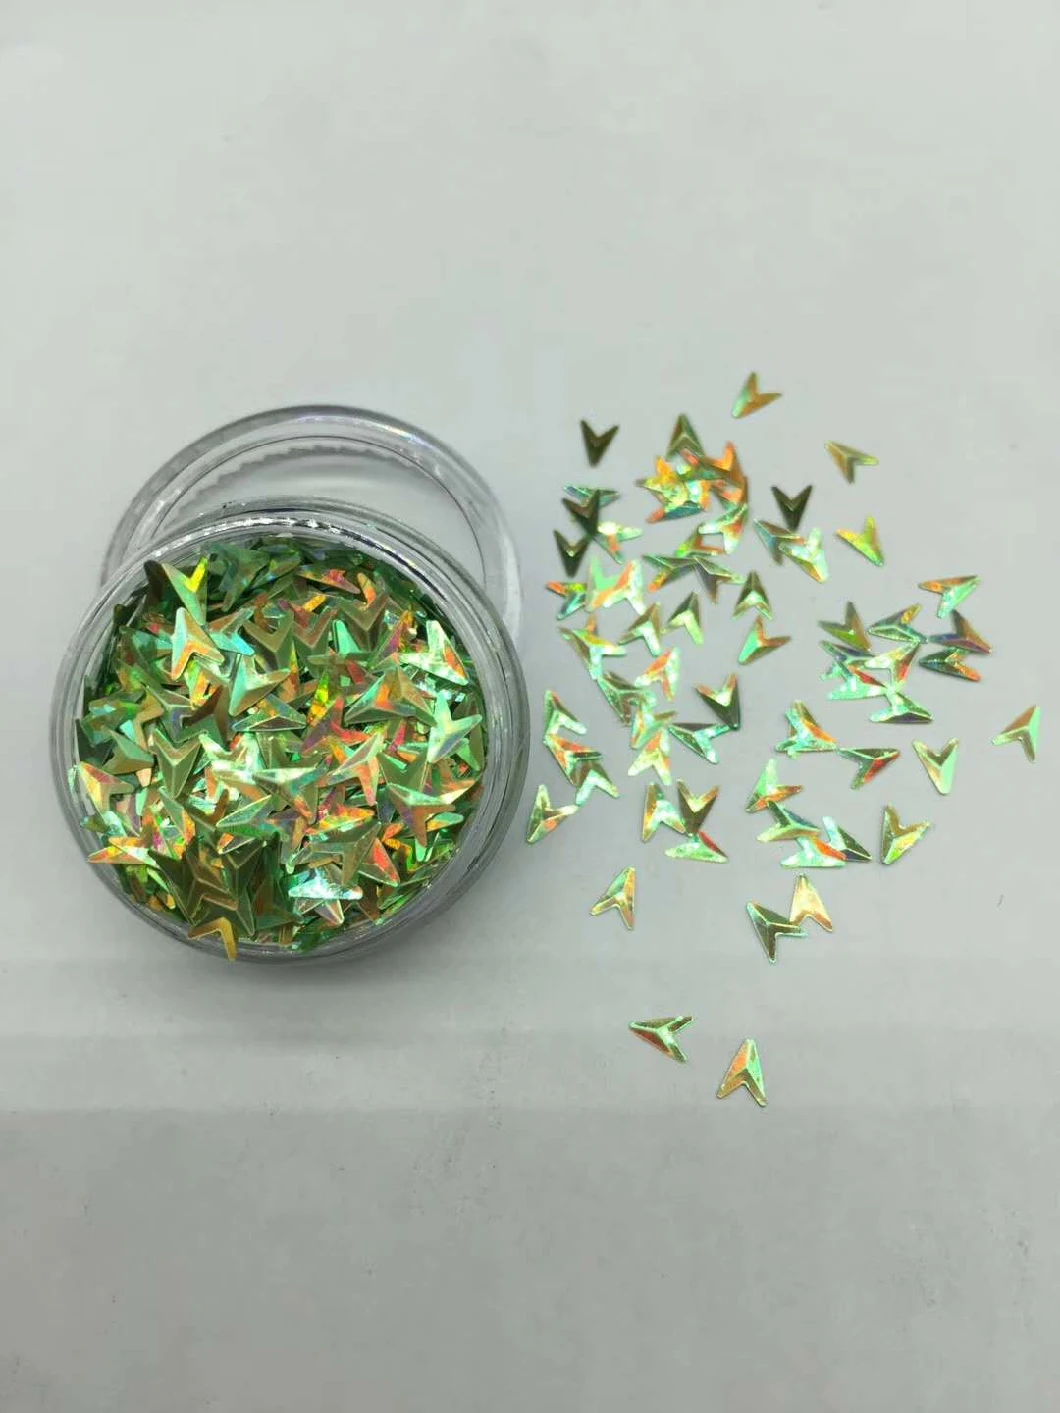 Pet Diamond Arrow Glitter Fot Nail Arts and Cosmetic